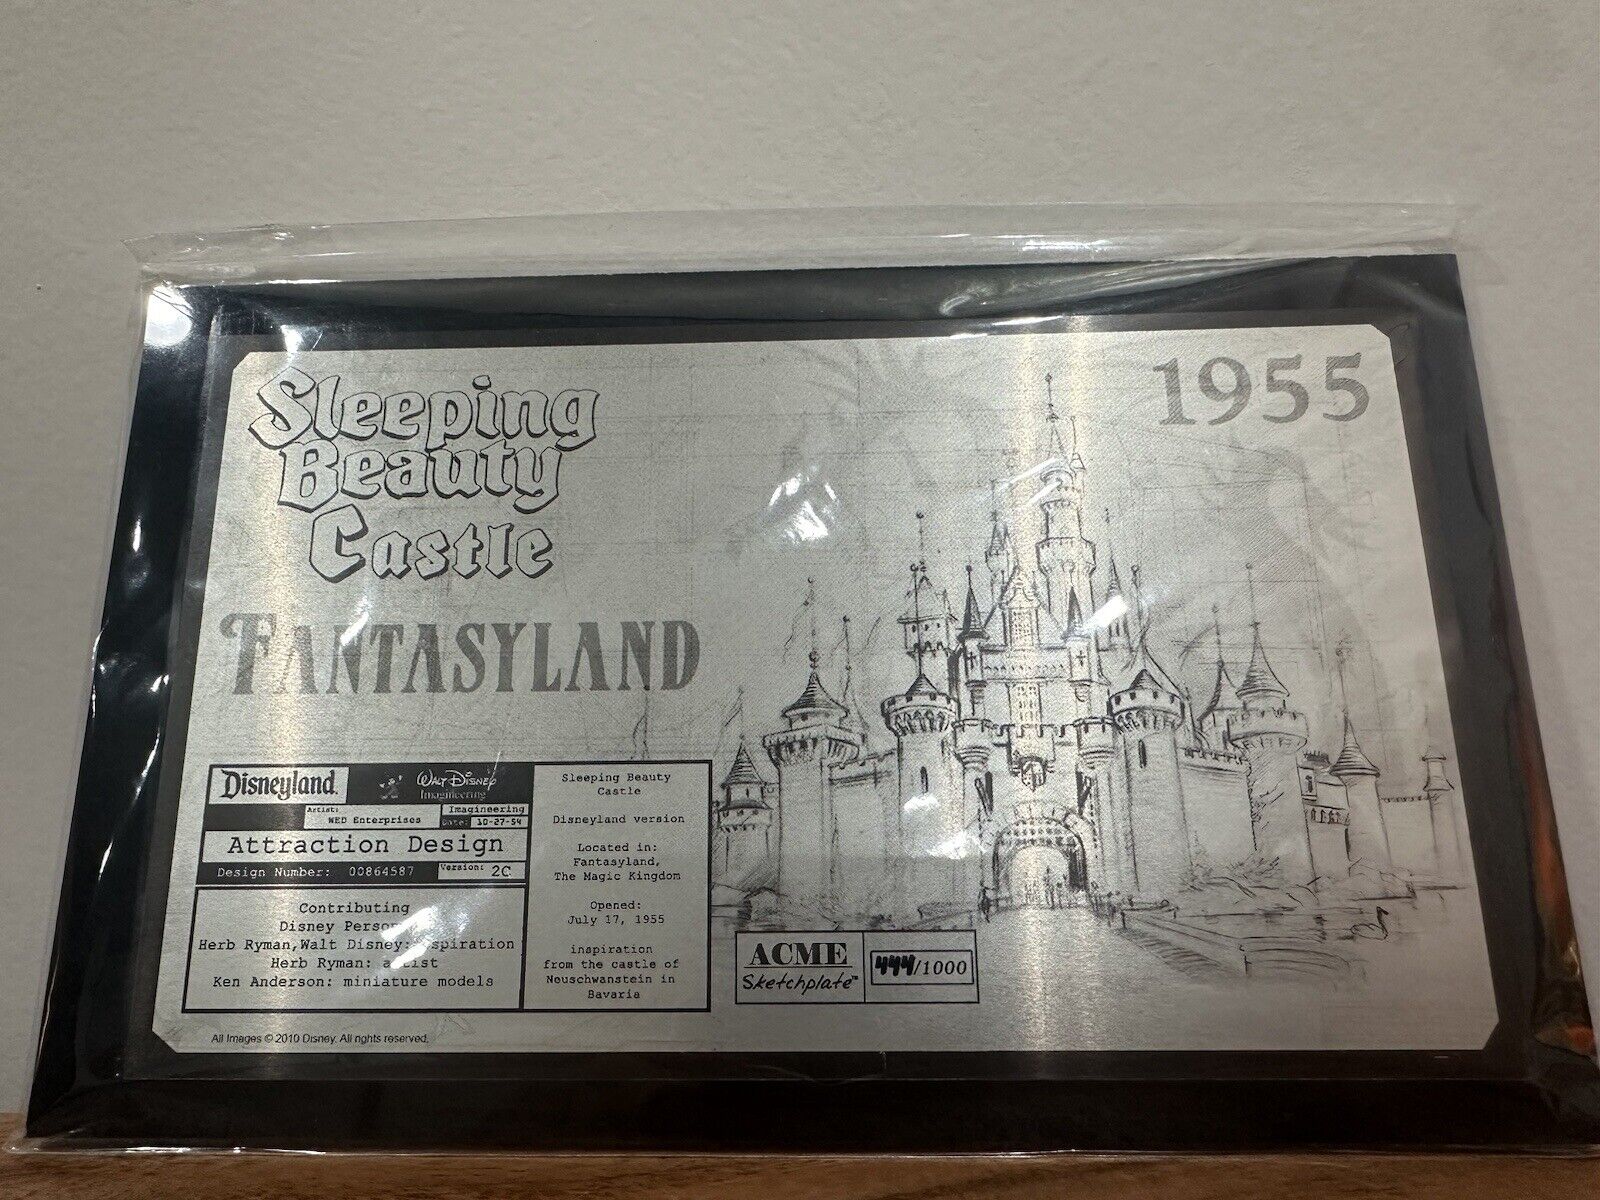 Disneyland Sleeping Beauty Castle Attraction Design LE Acme Sketchplate New Rare